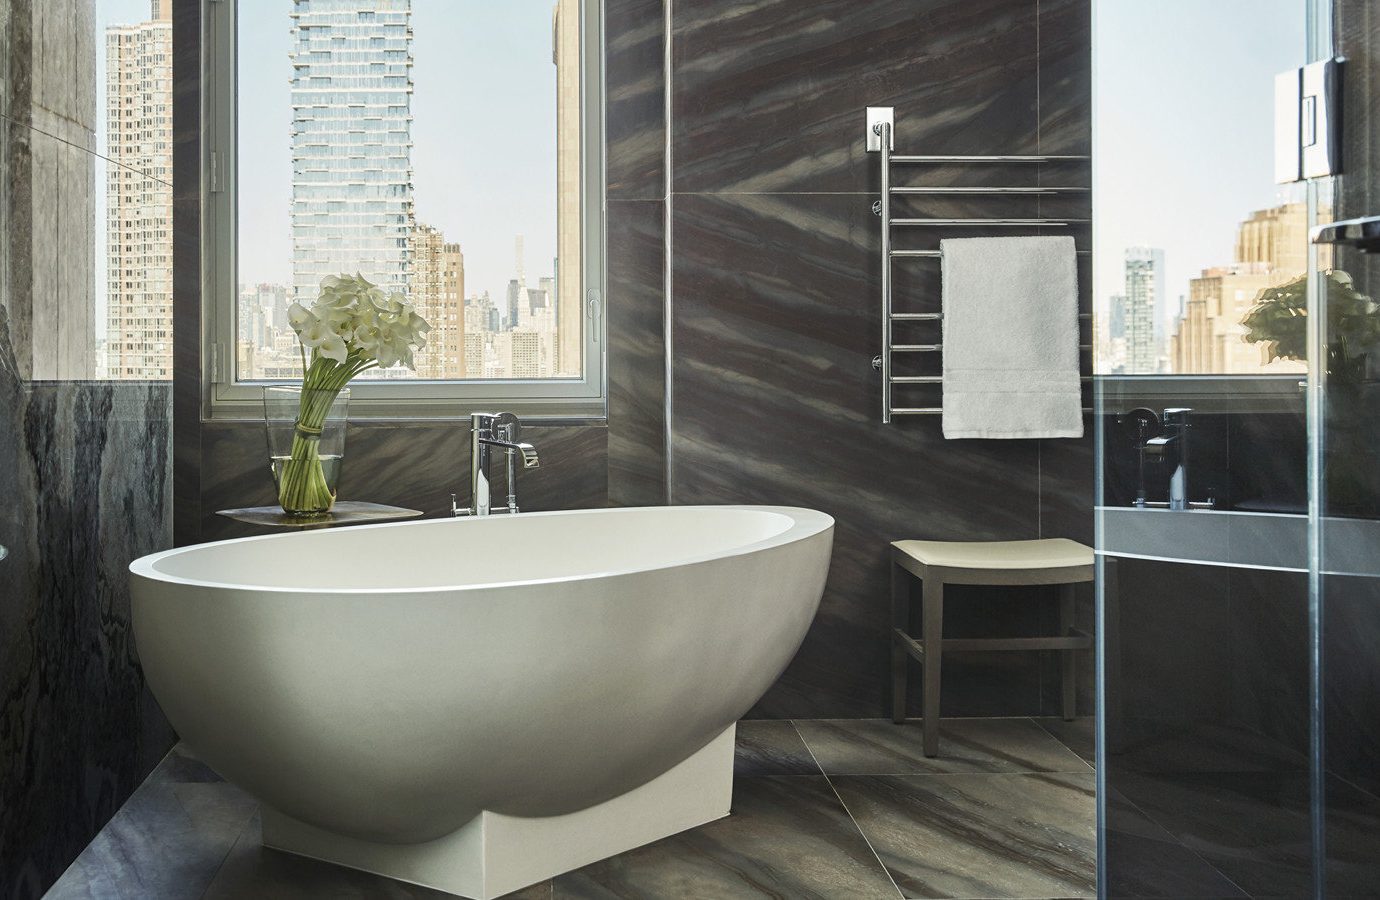 Hotels indoor floor window room bathtub bathroom plumbing fixture bidet interior design flooring tile tub tiled